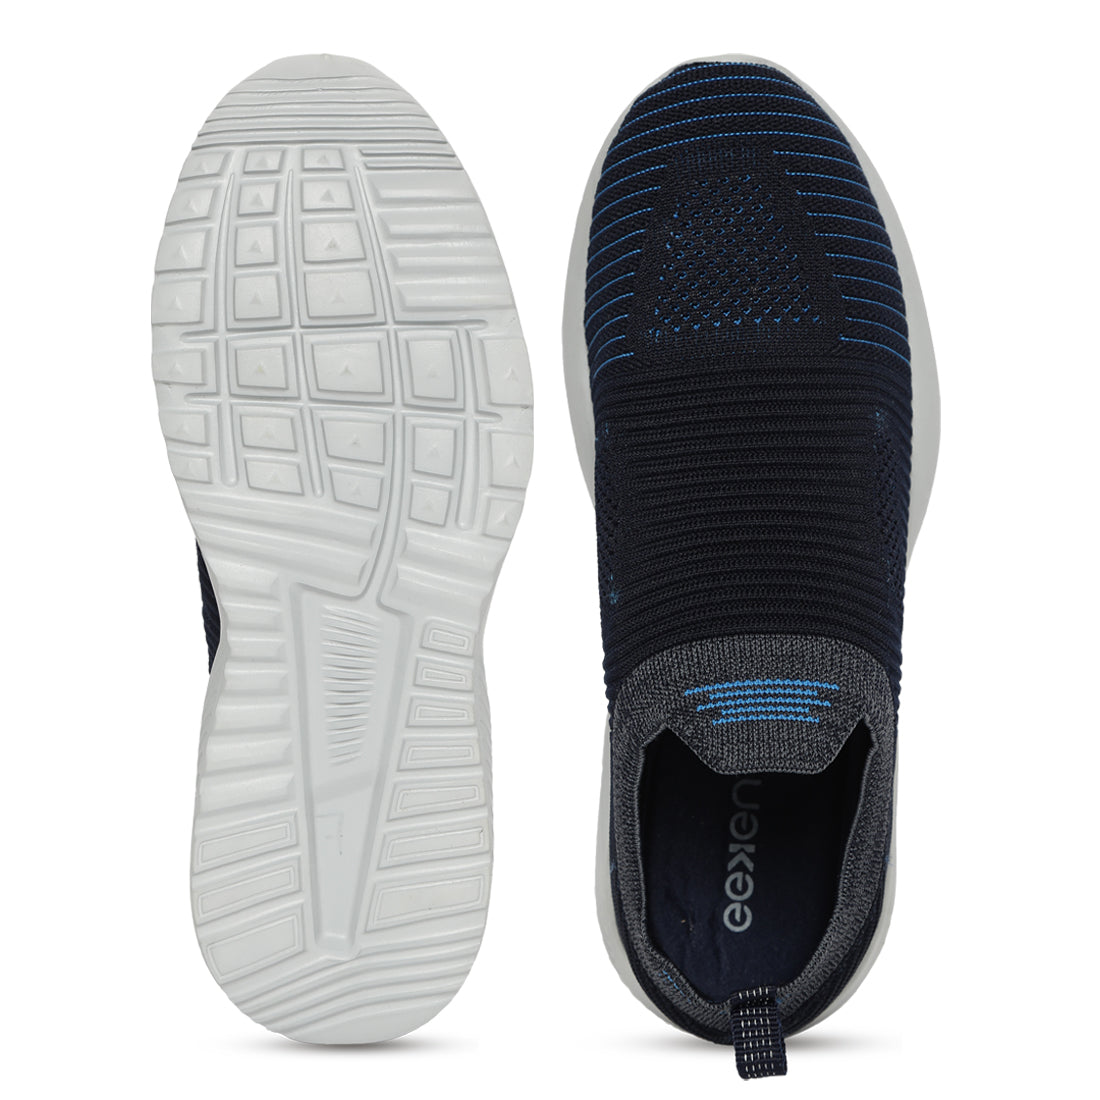 Eeken Navy Blue - Sky Blue Athleisure Shoes for Men